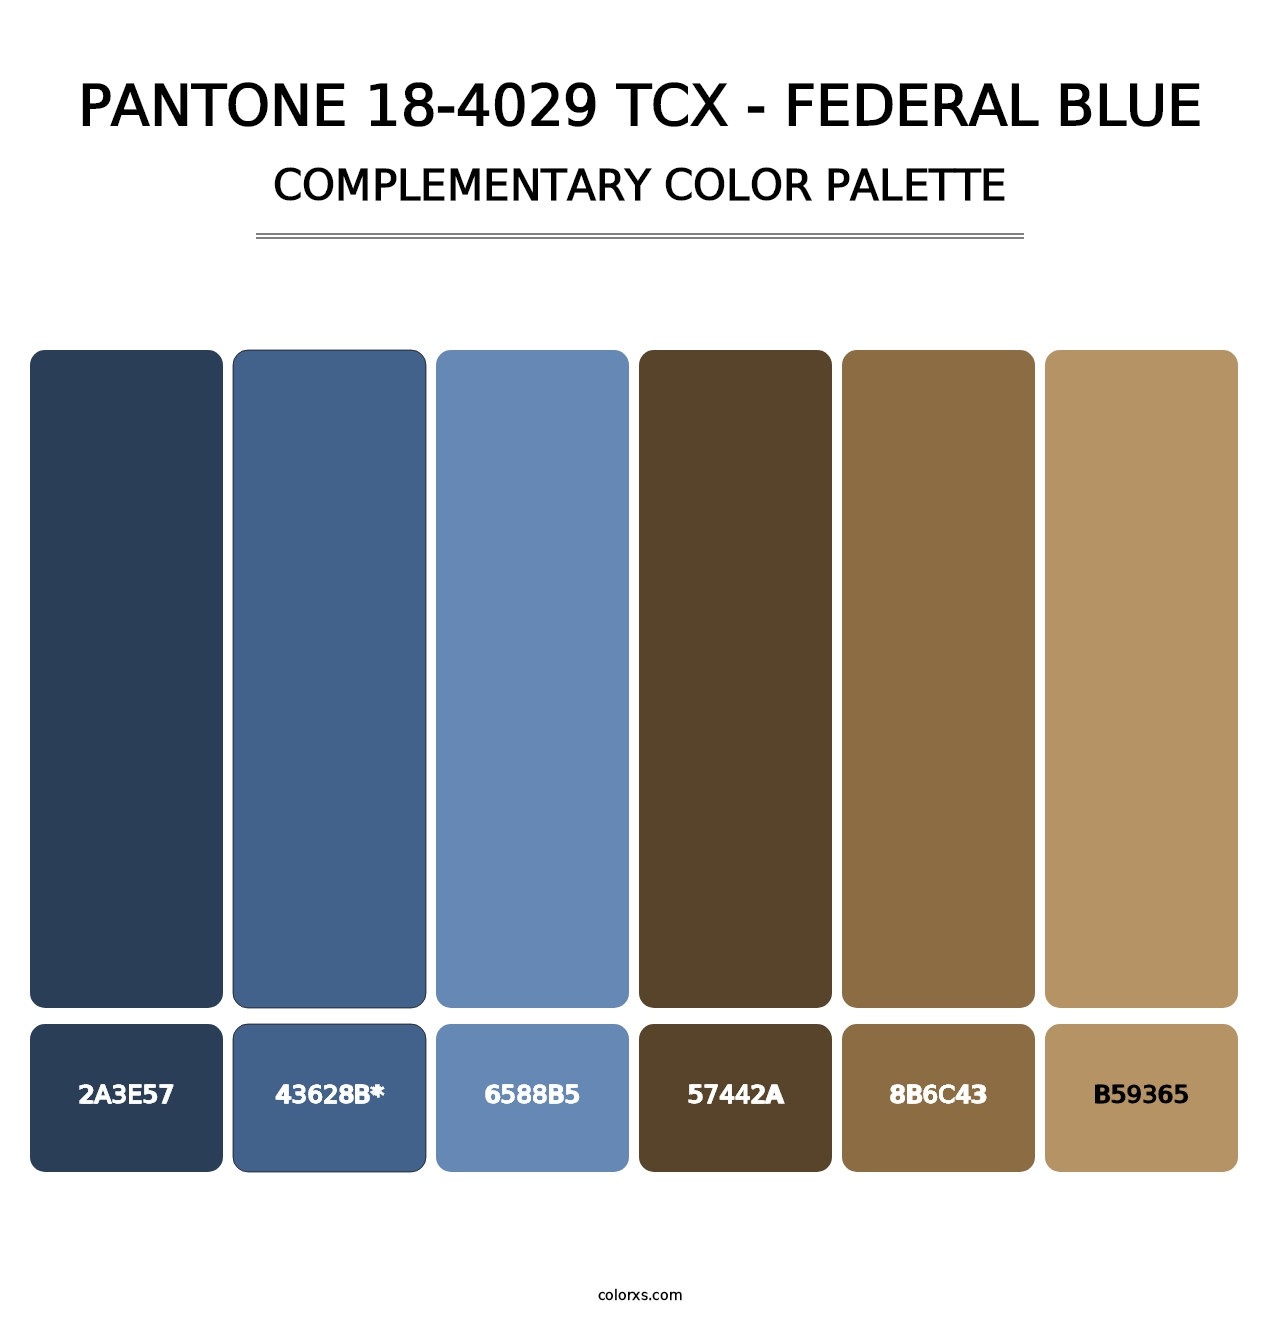 PANTONE 18-4029 TCX - Federal Blue - Complementary Color Palette